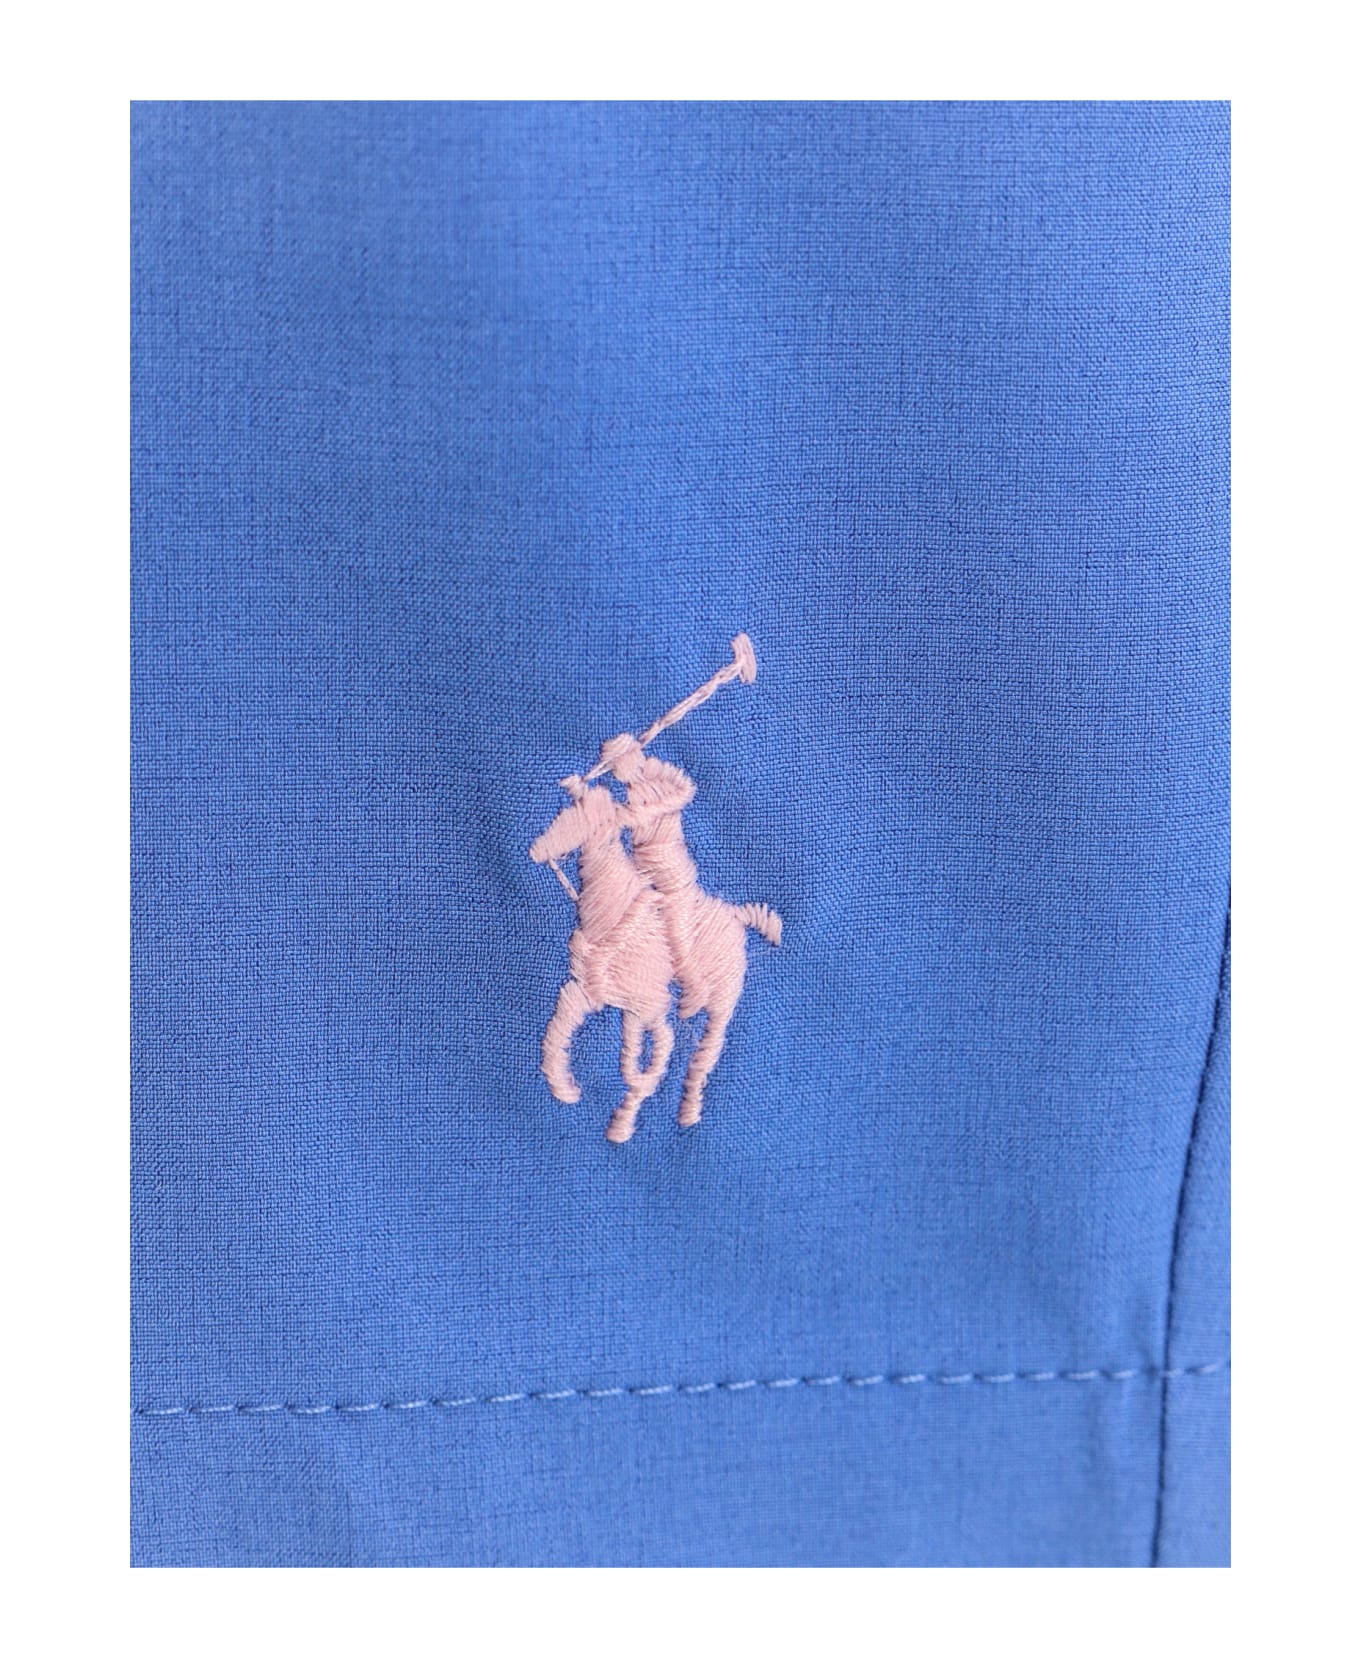 Ralph Lauren Light Blue Swim Shorts With Embroidered Pony - NEWENGLANDBLUE 水着